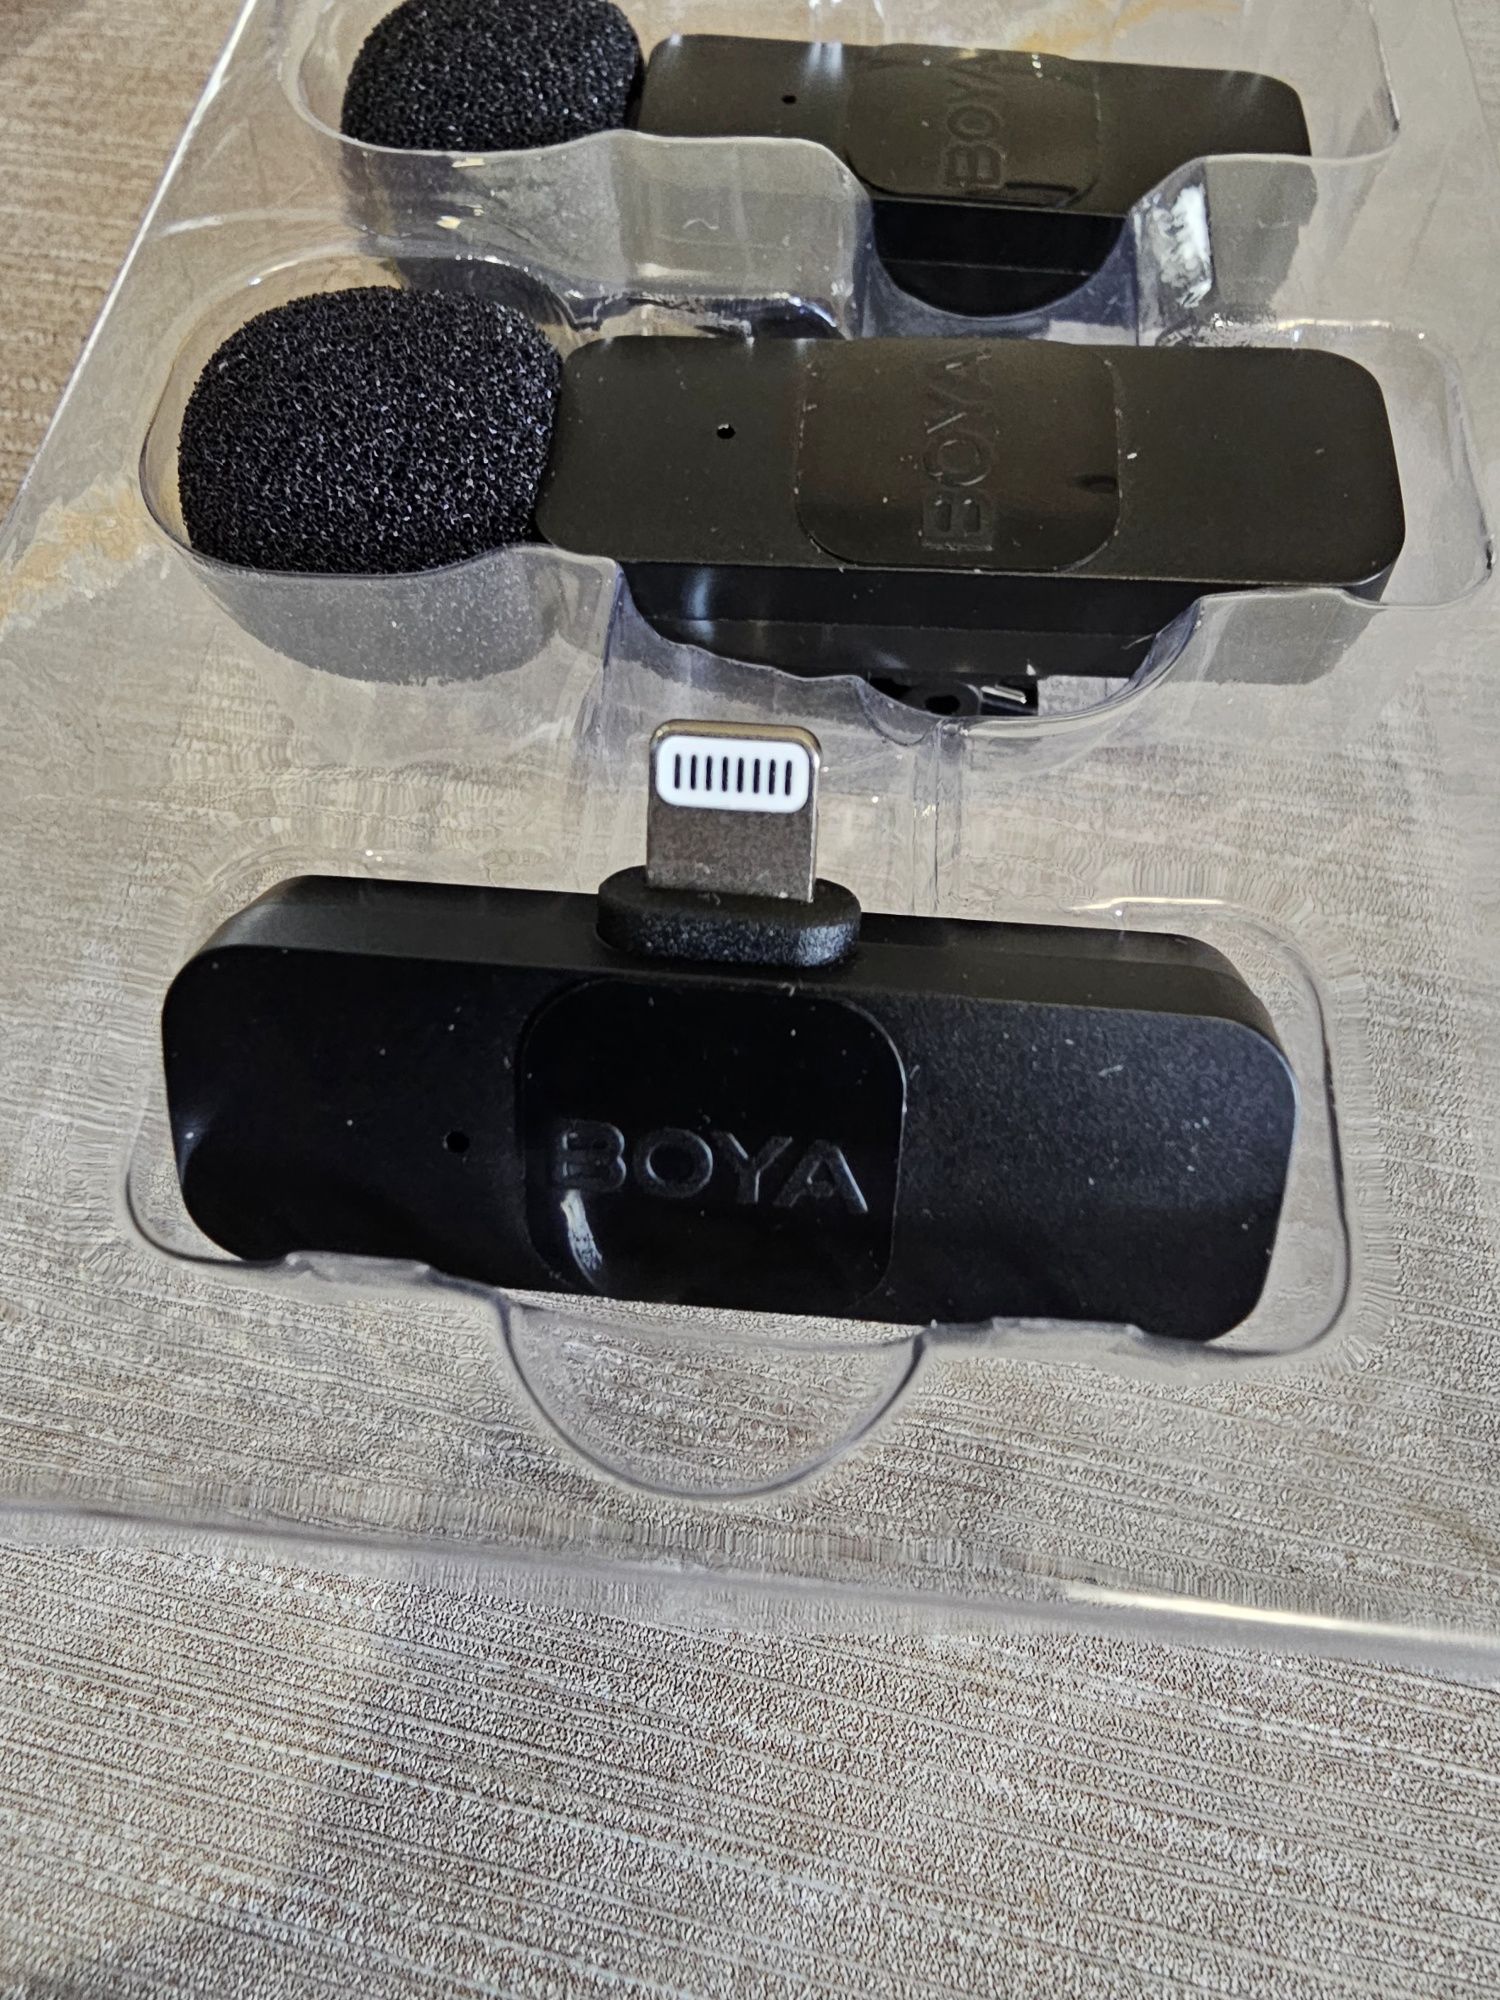 Микрофон Boya BY-V2 для IPhone, iPad